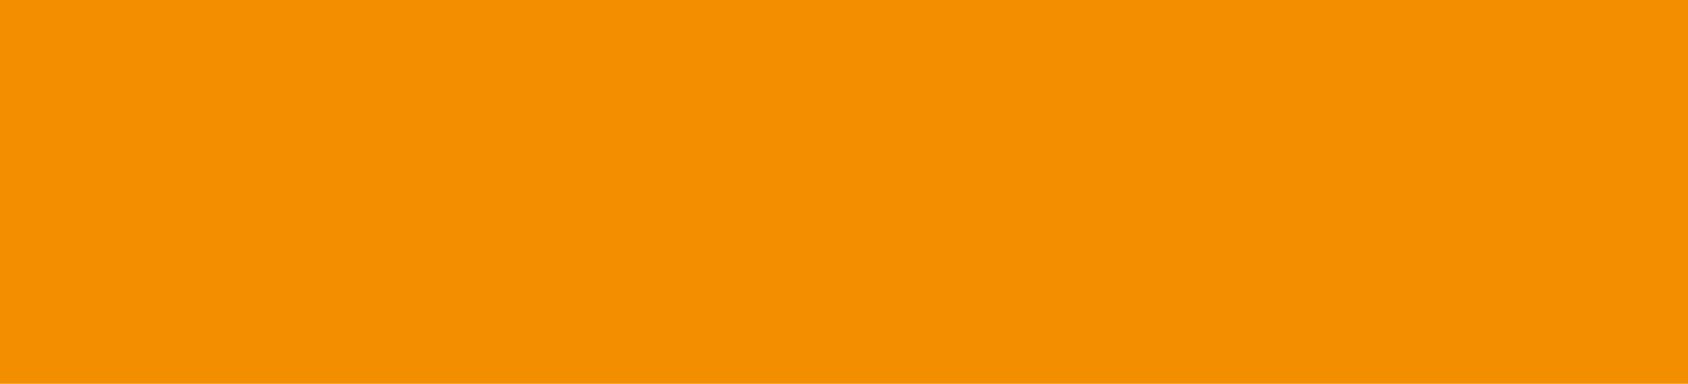 A close up of a bright orange background.